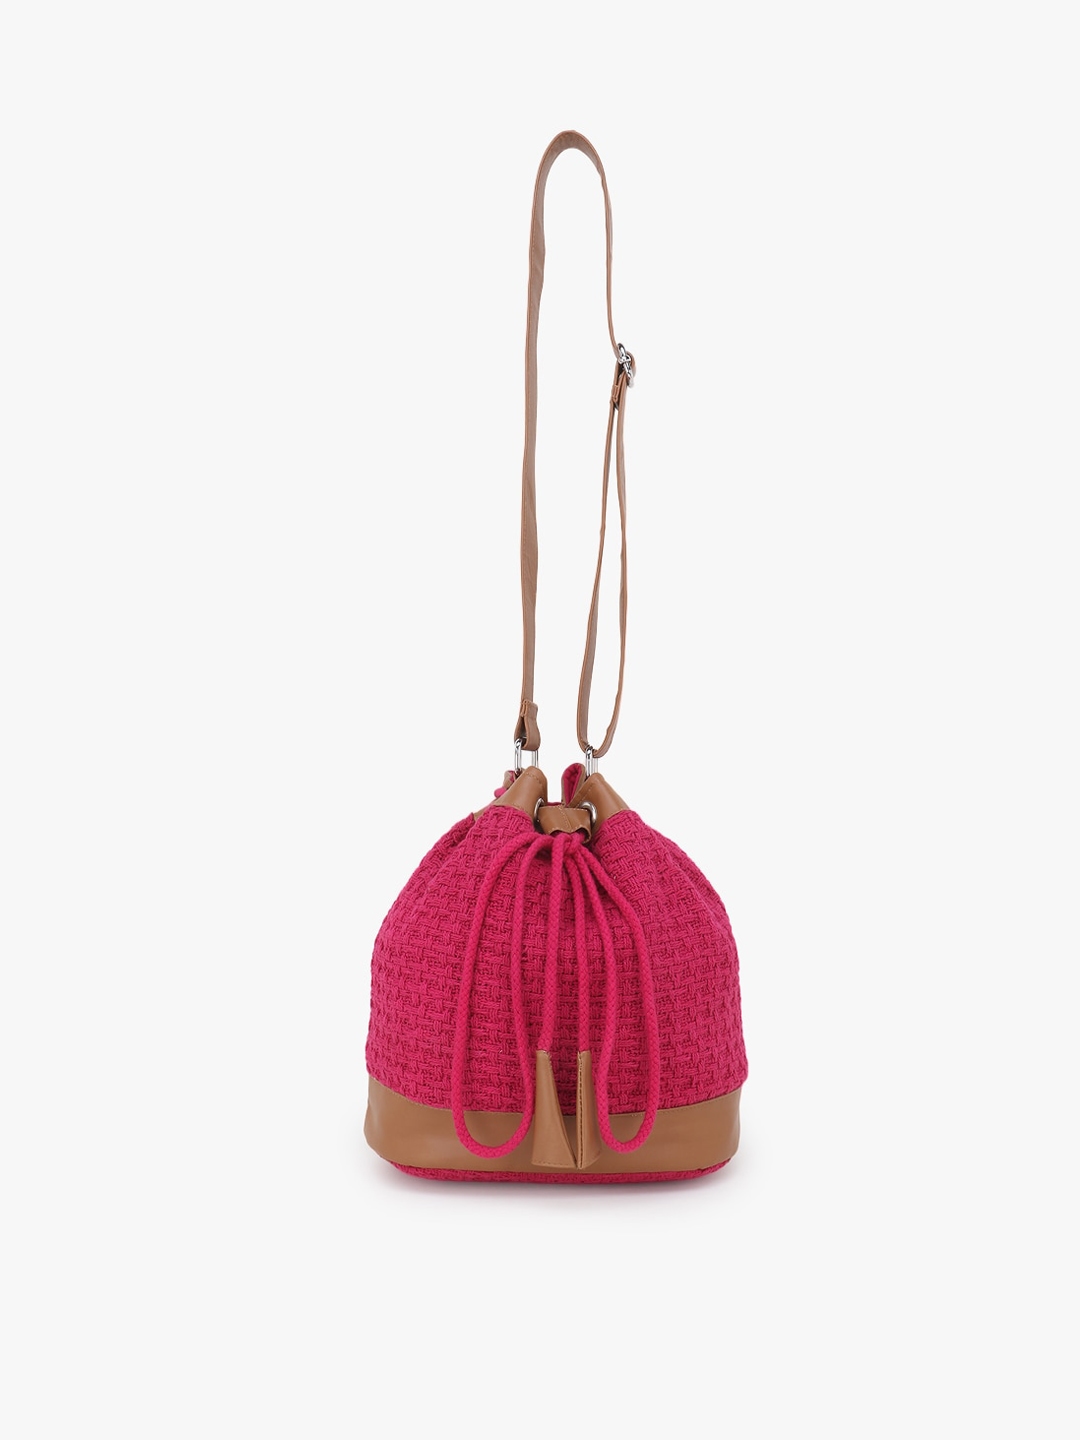 Anekaant Pink Textured Shoulder Bag